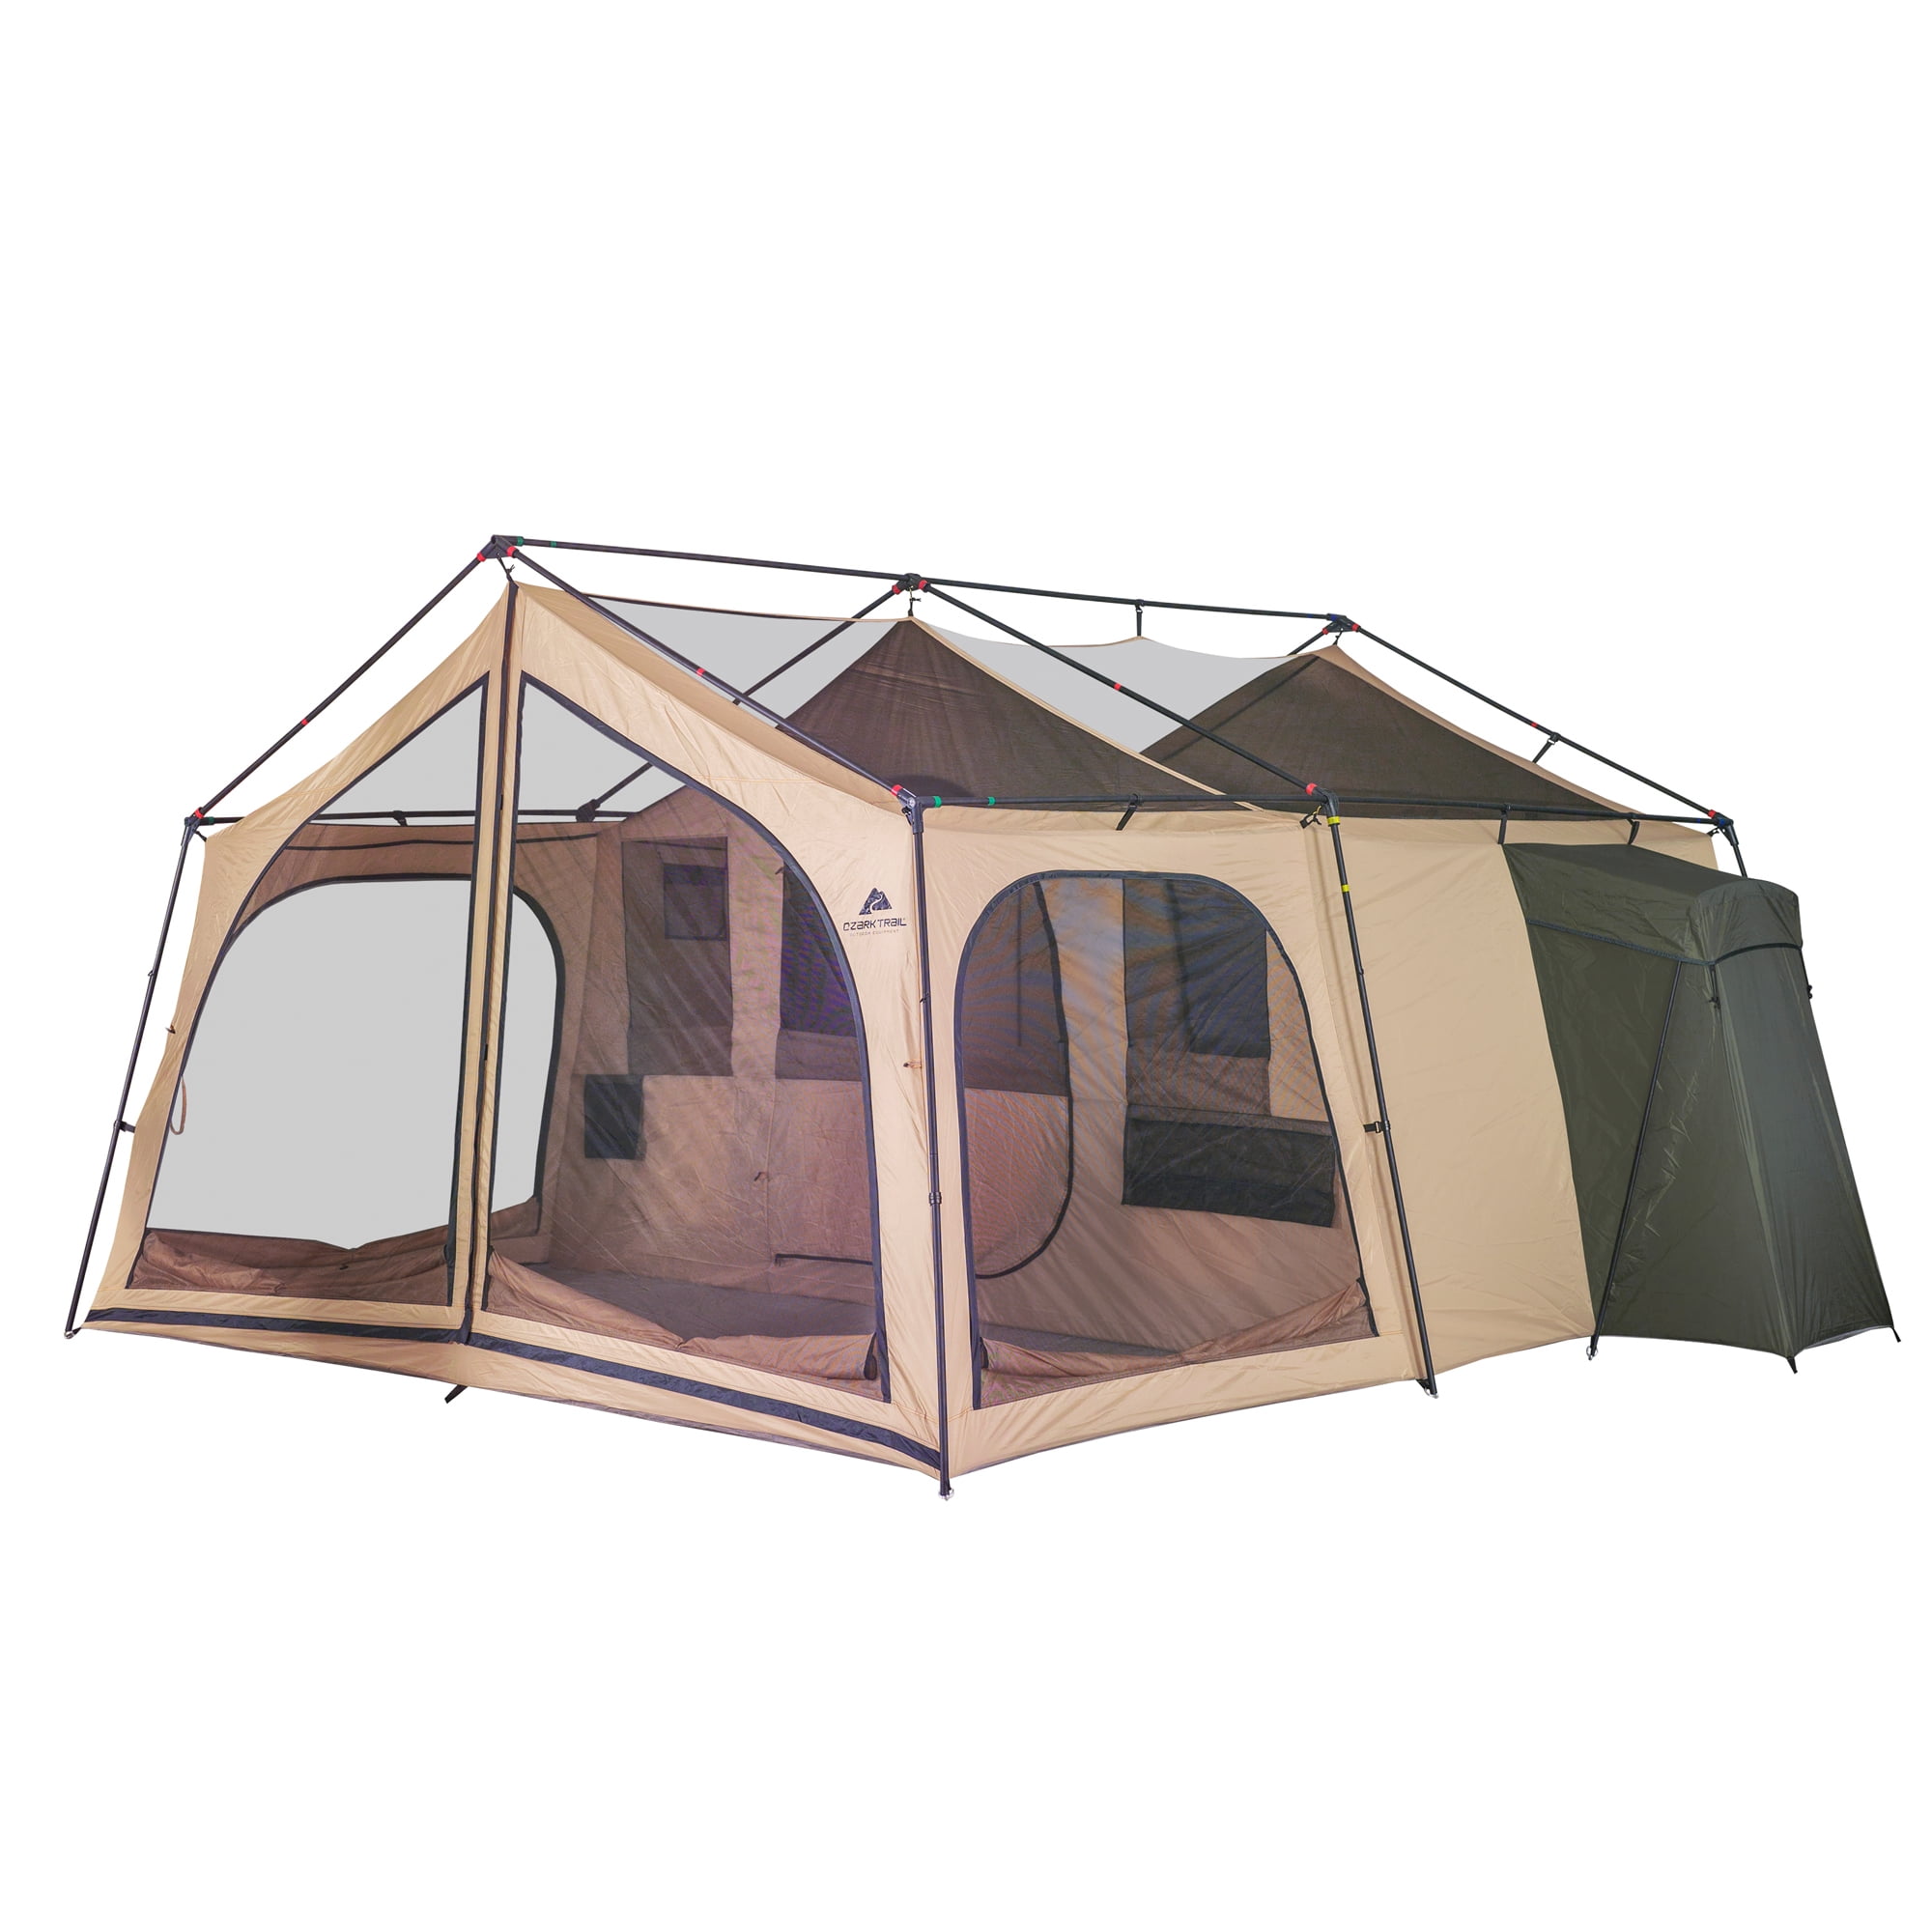 Ozark Trail 14-Person Cabin Tent for Camping - Walmart.com